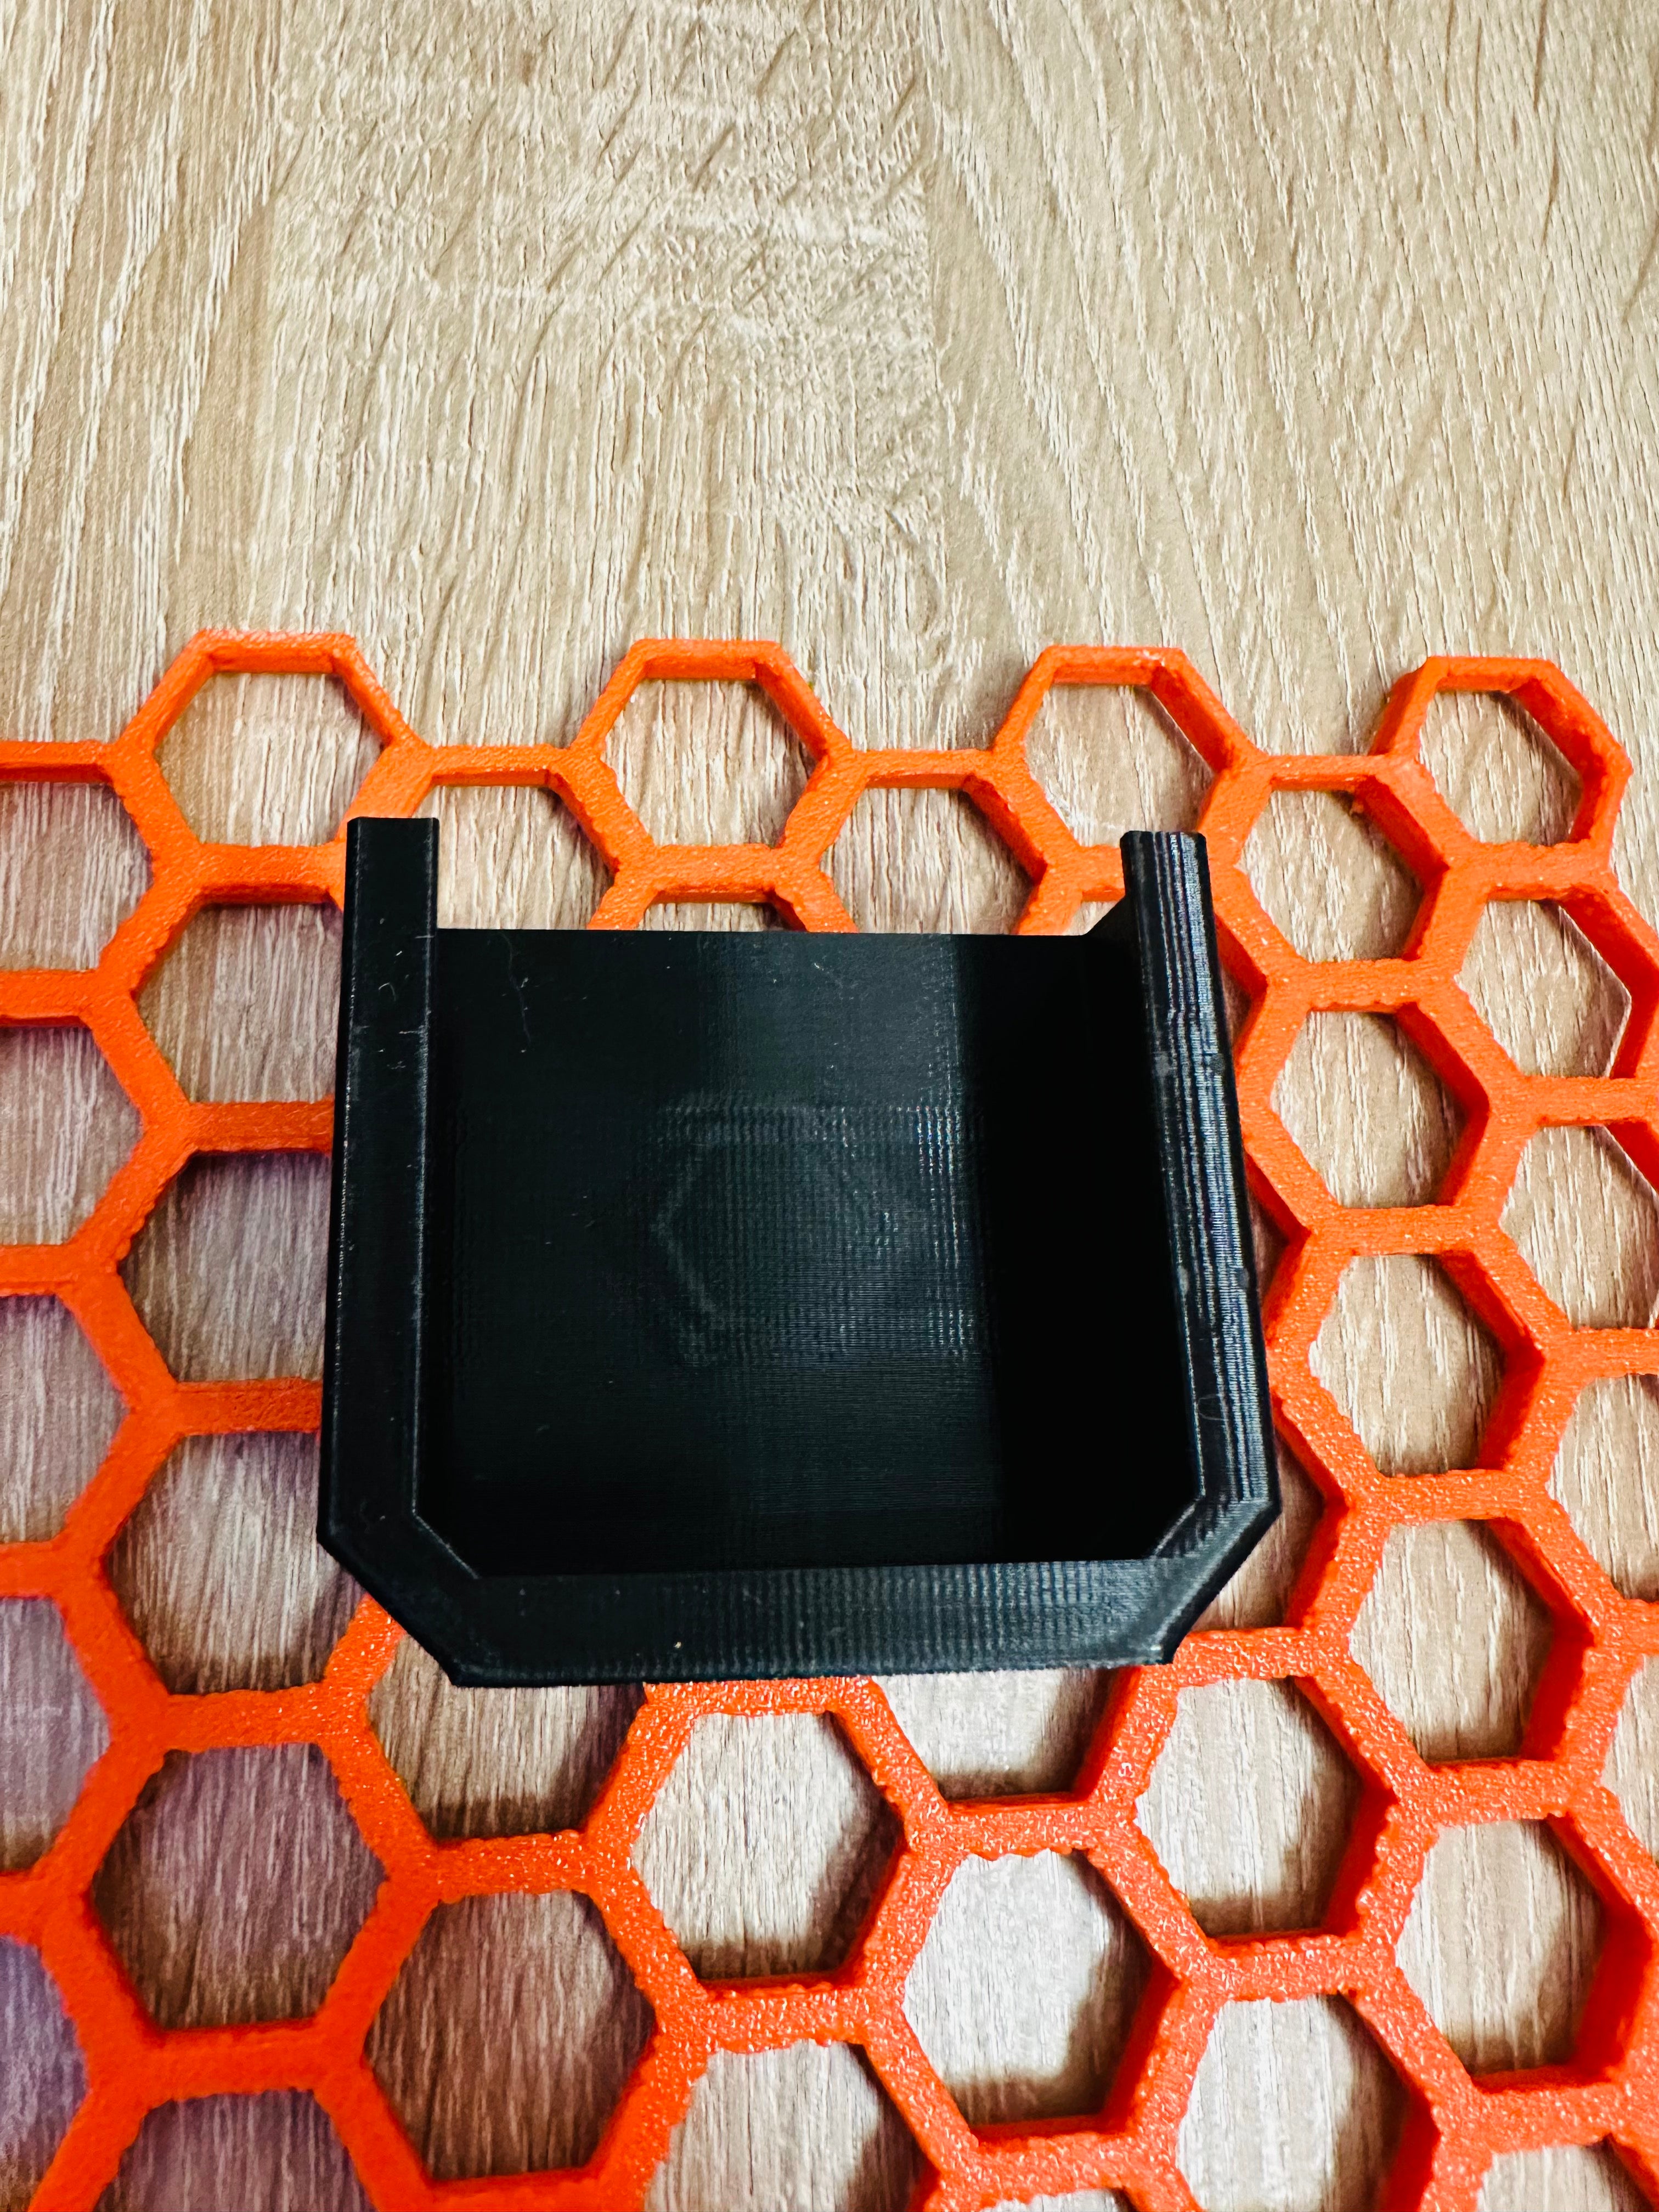 Apple Magic Mouse-Halter für Honeycomb-Wandpaneele